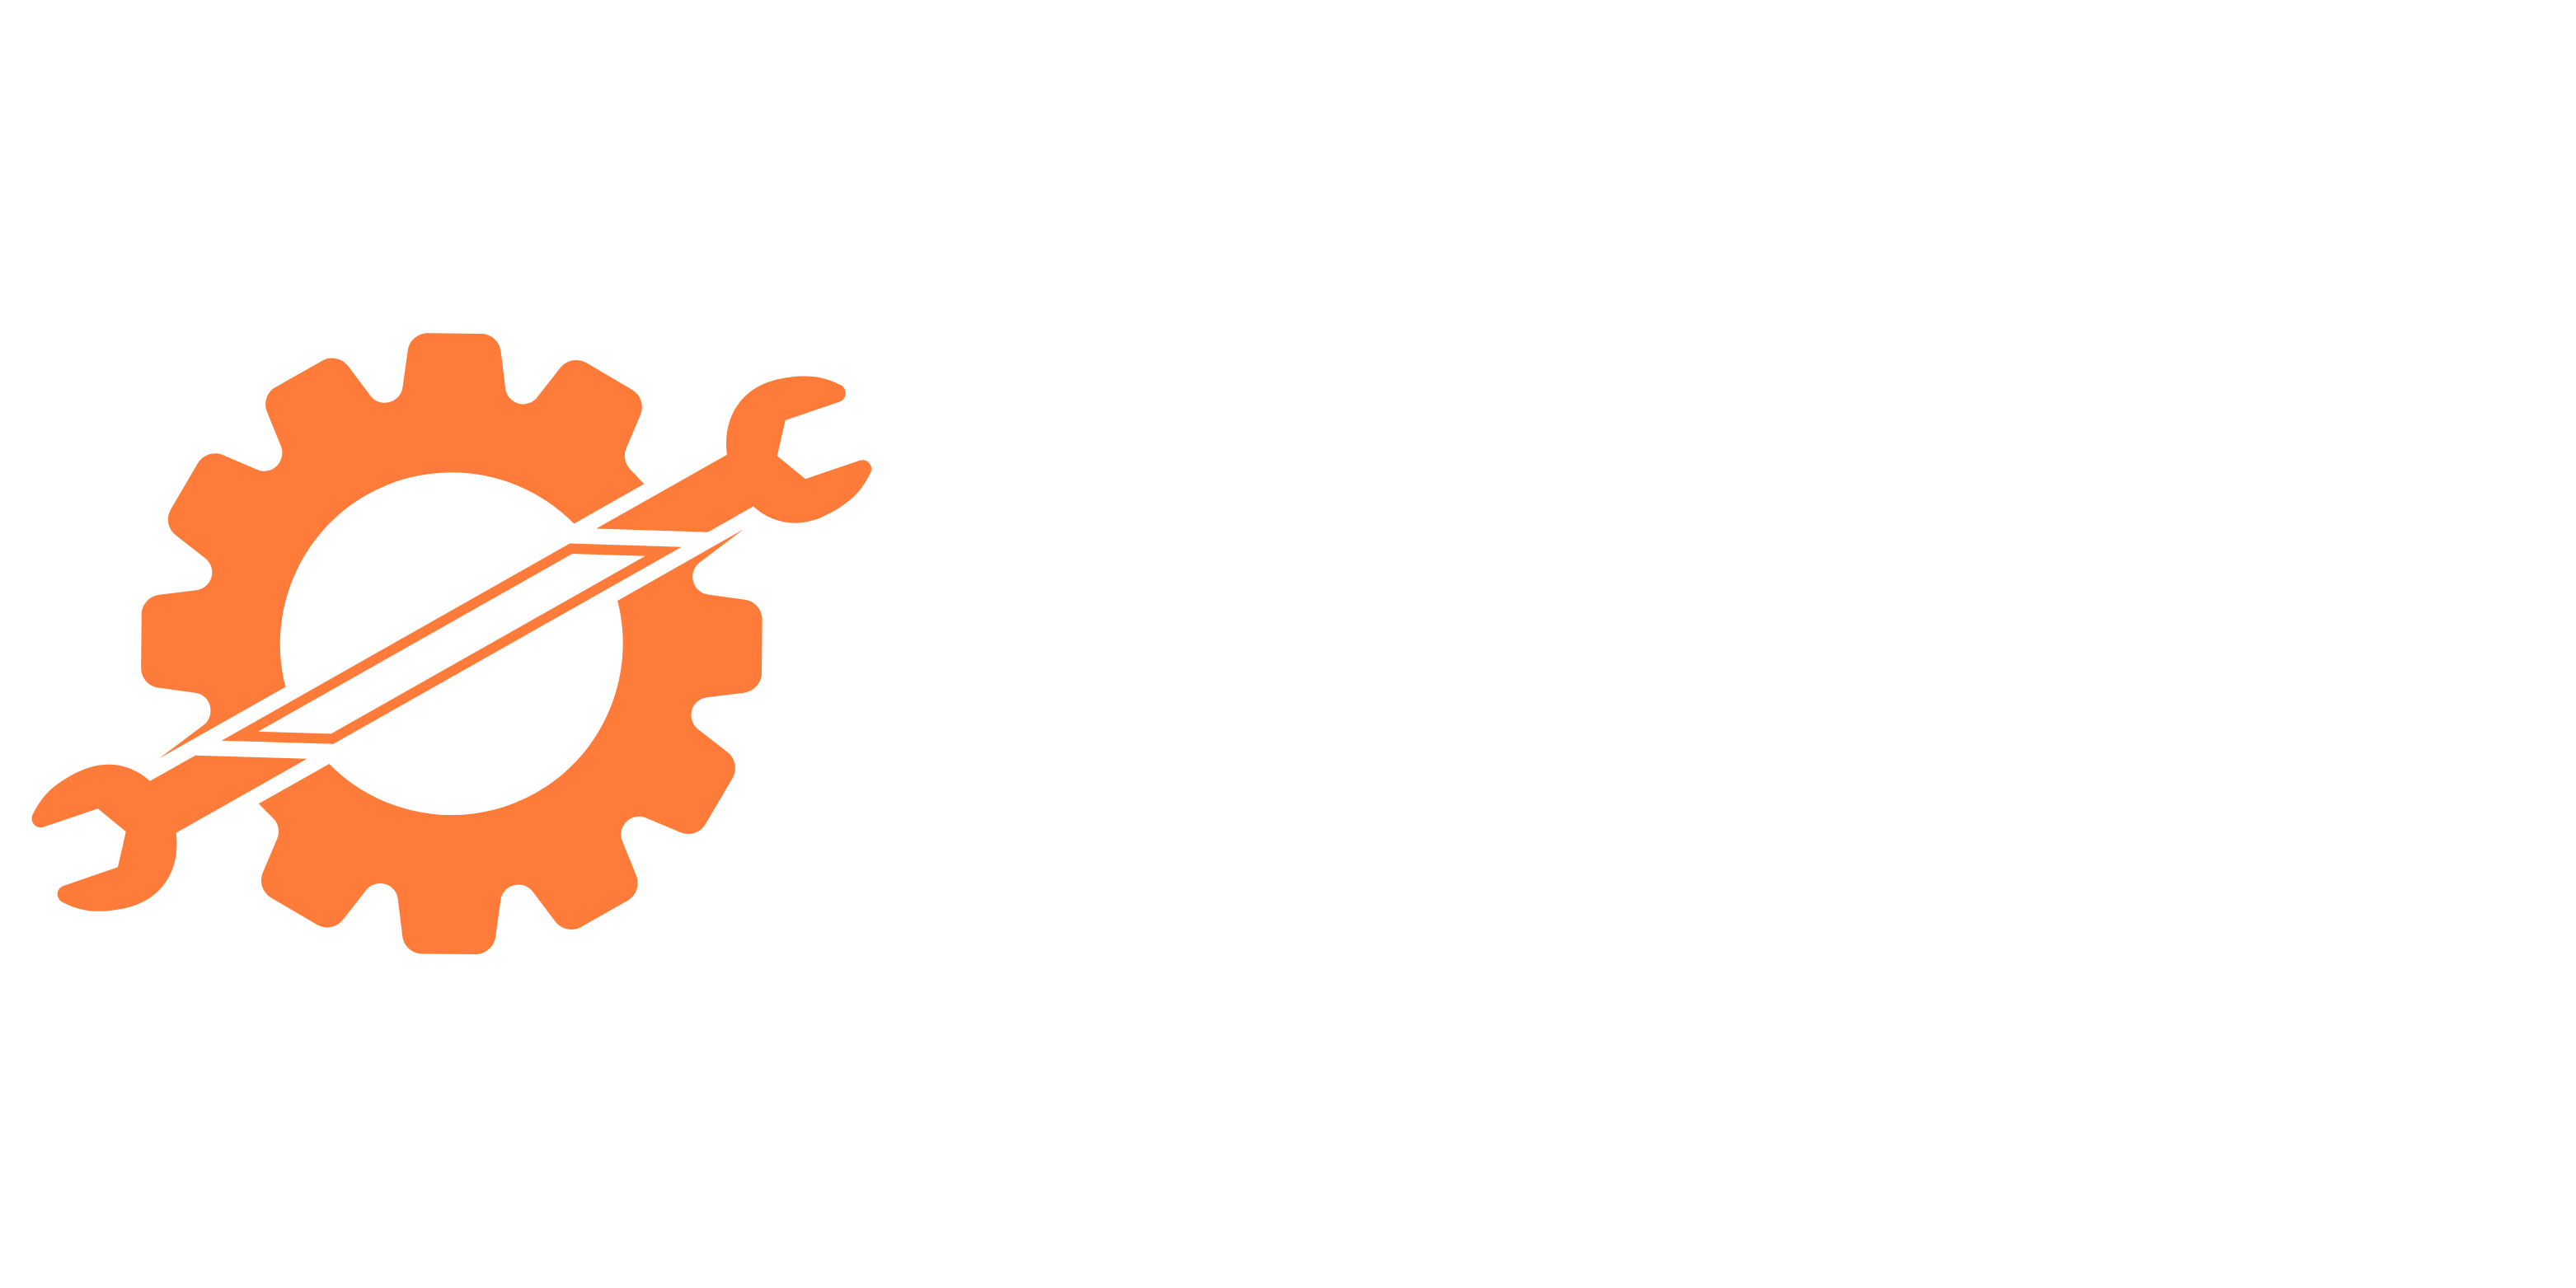 ac and washing machine repair Al riyadh